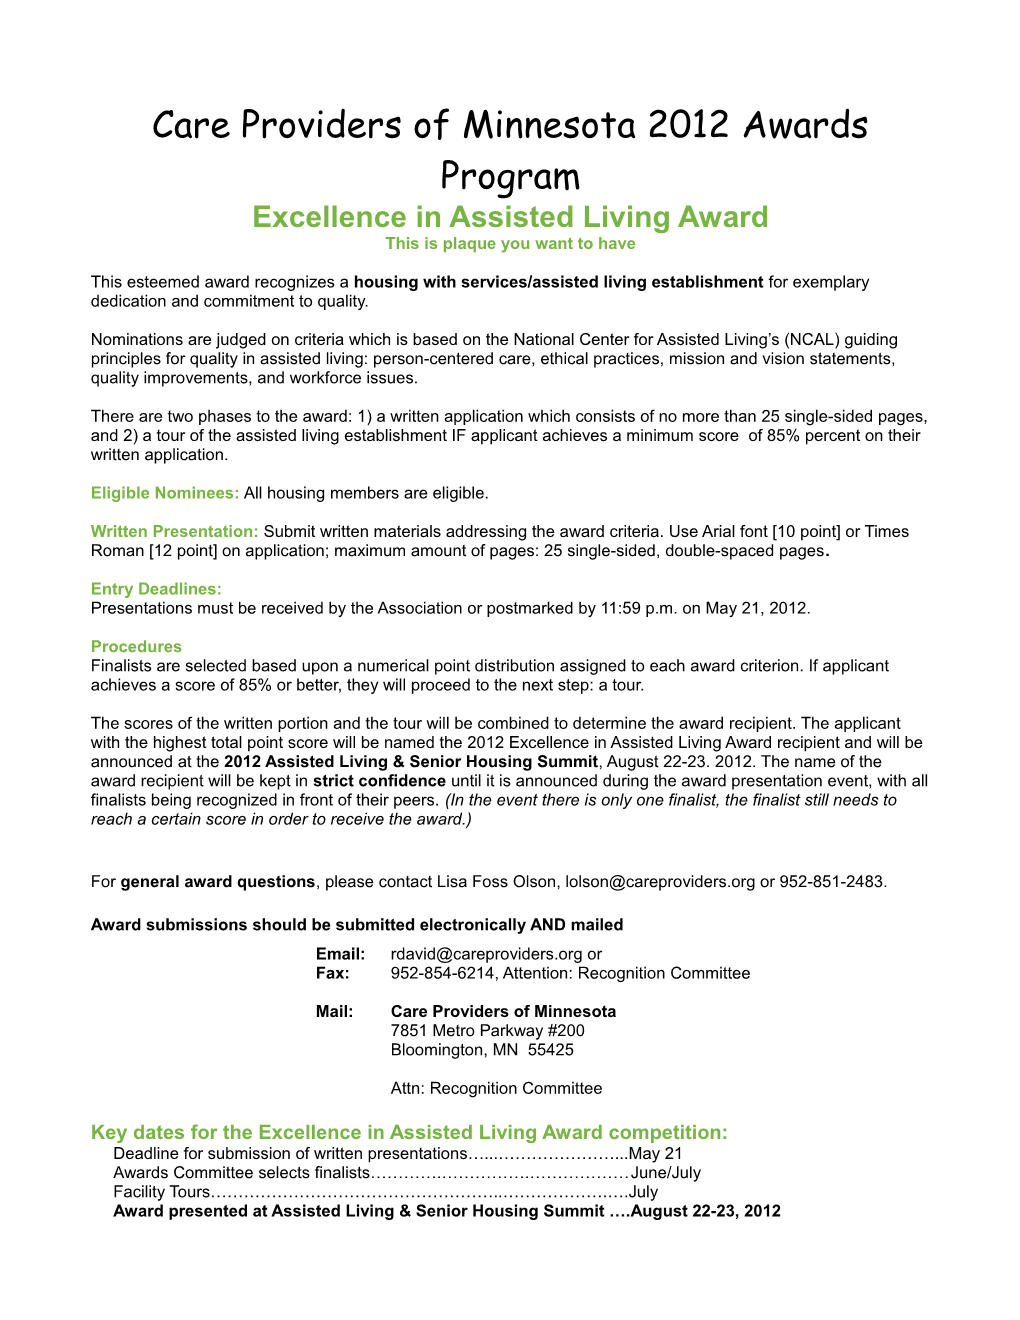 Care Providers of Minnesota 2012 Awards Program